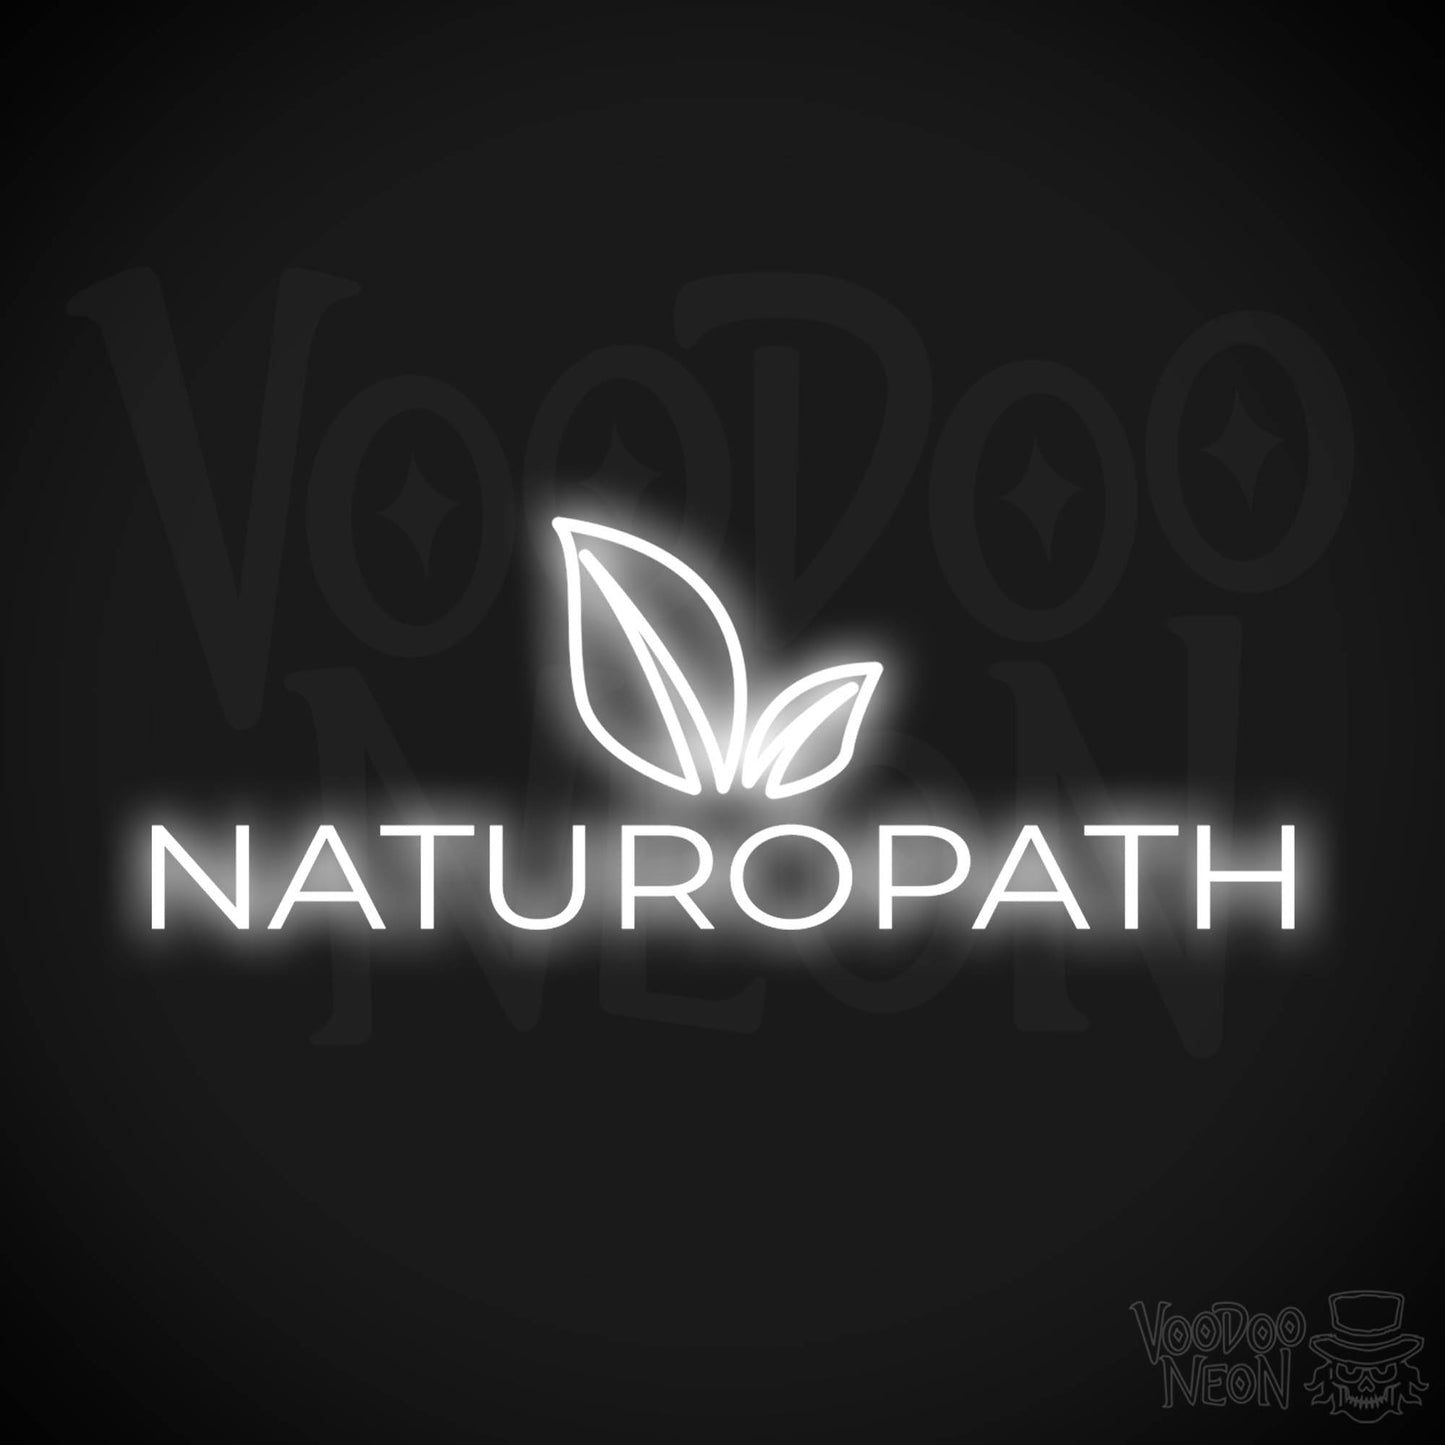 Naturopath LED Neon - White